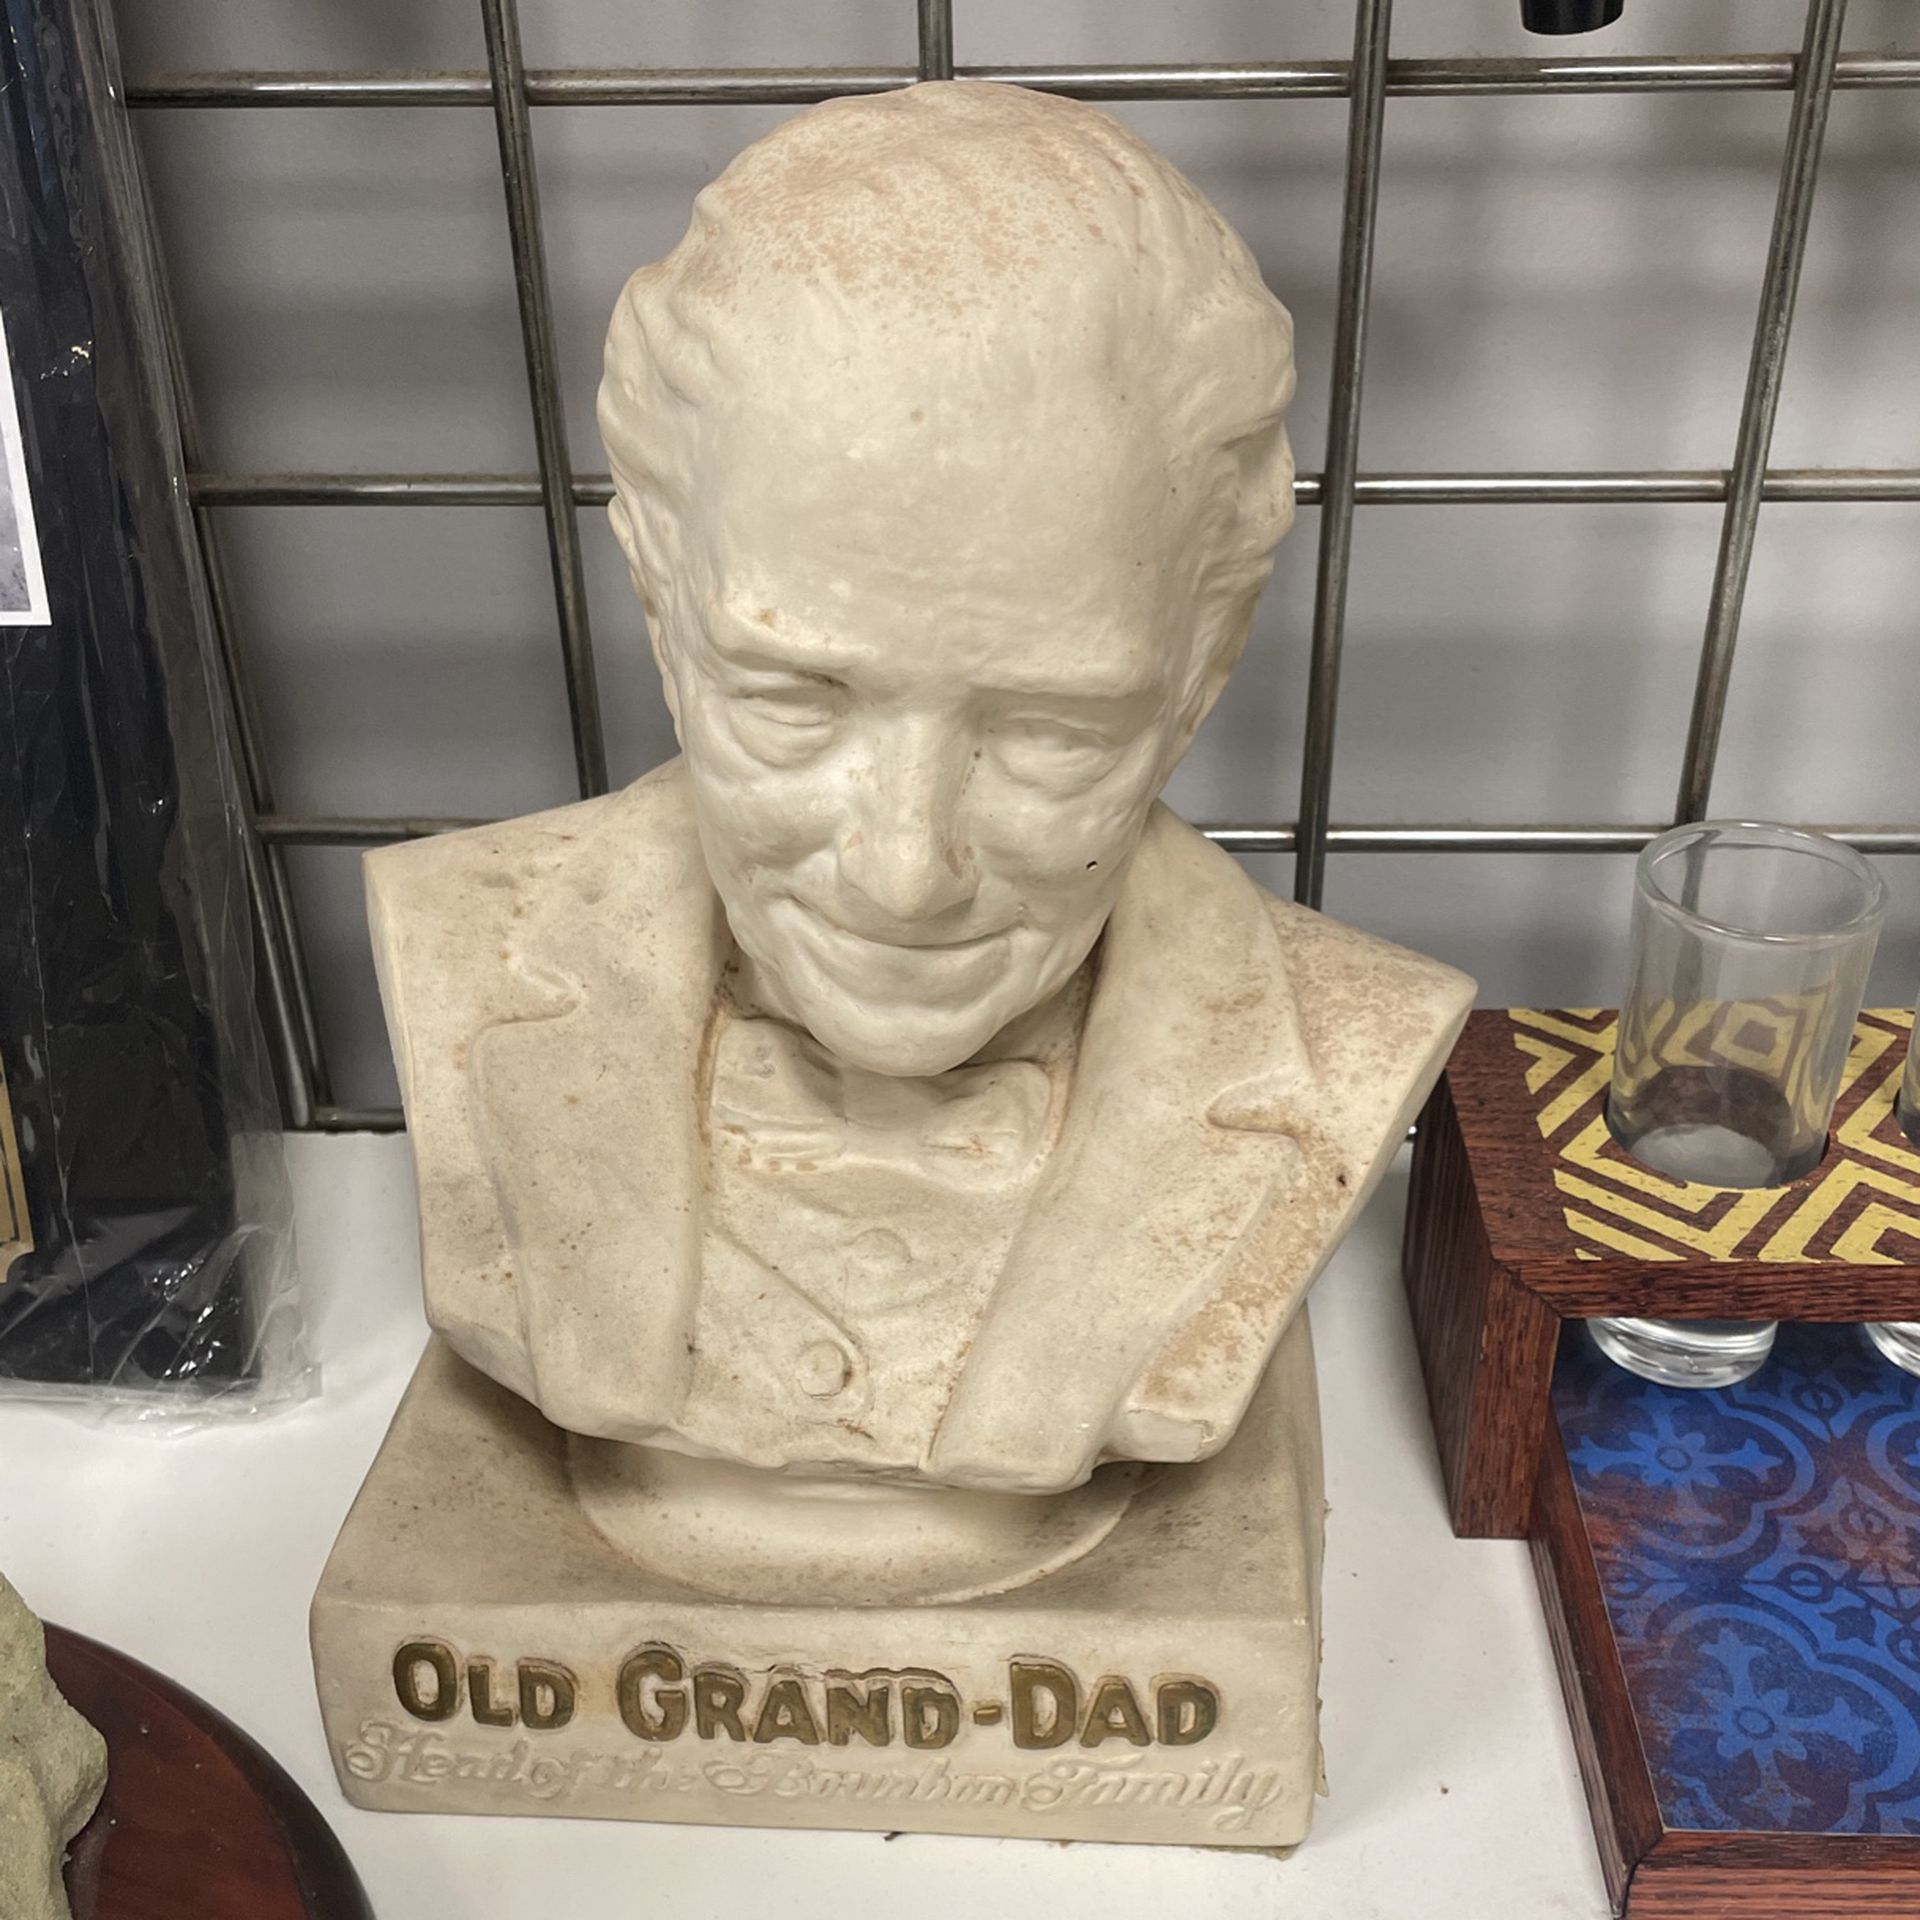 Old Grand-dad Display